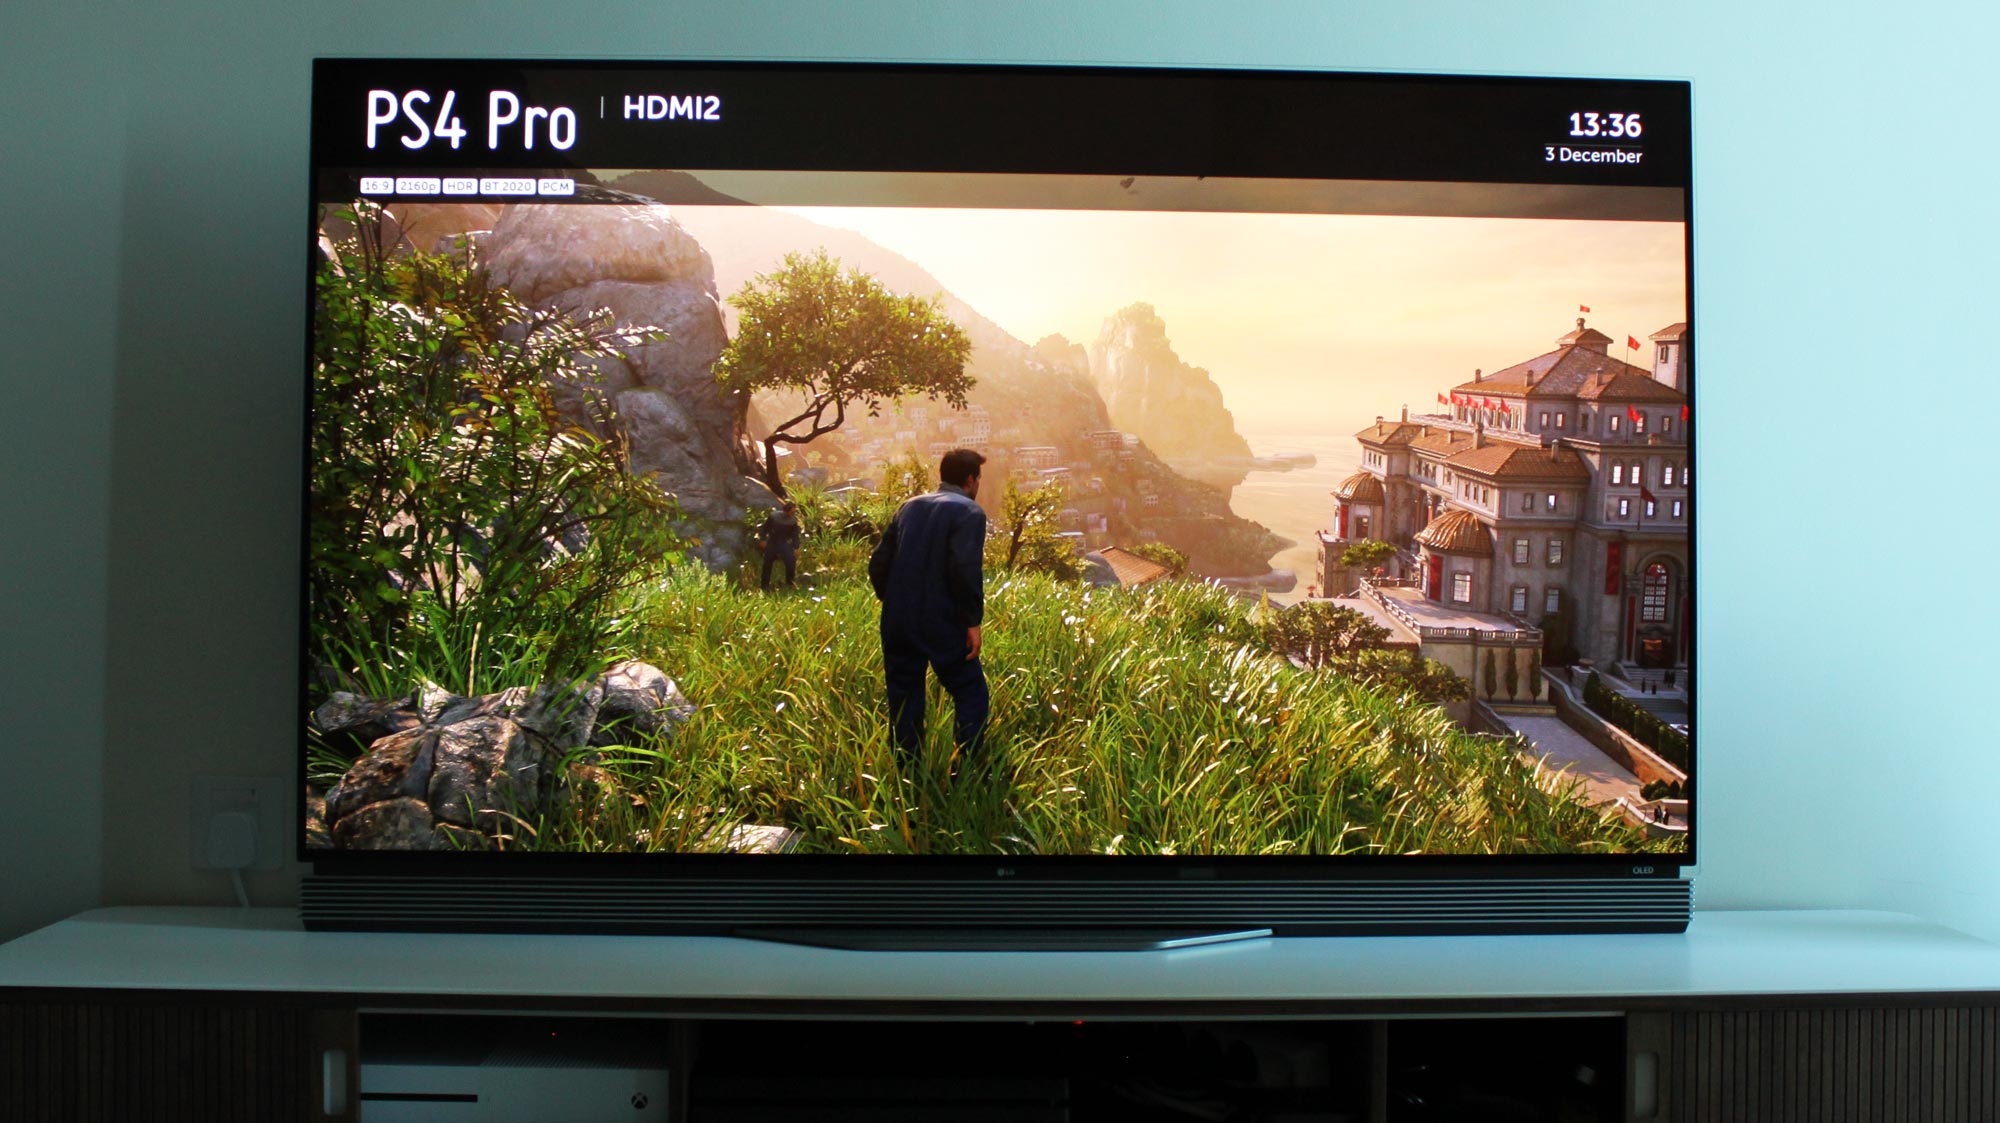 Samsung ps5. Ps4 HDR. Телевизор для плейстейшен 4. PLAYSTATION 4 Pro телевизор. HDR: hdr10, HDR 10 Pro.